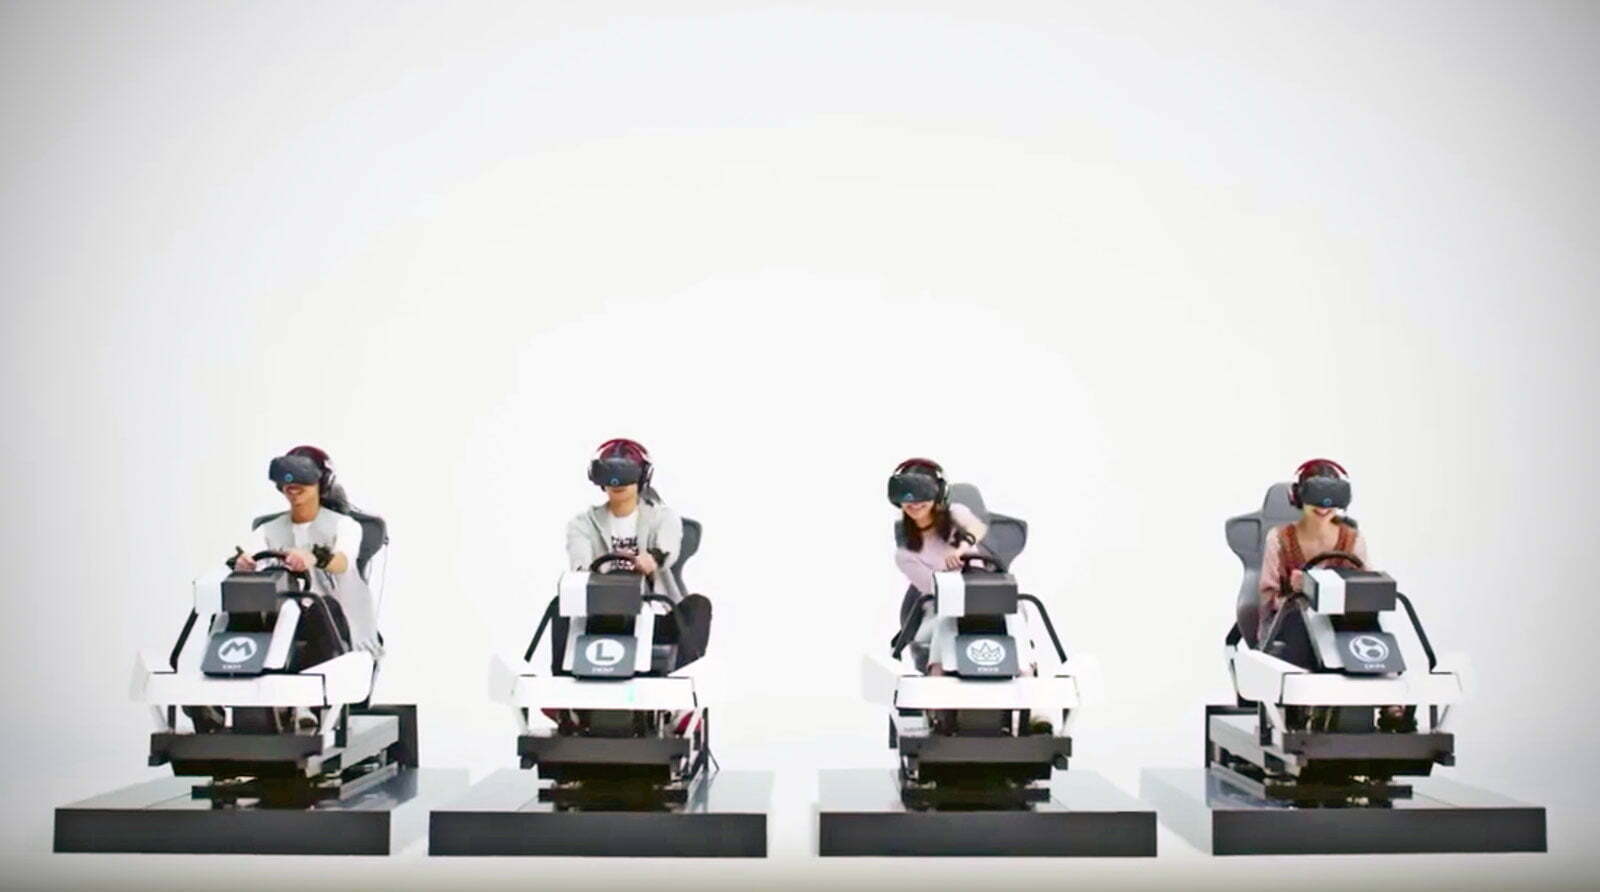 Mario Kart VR